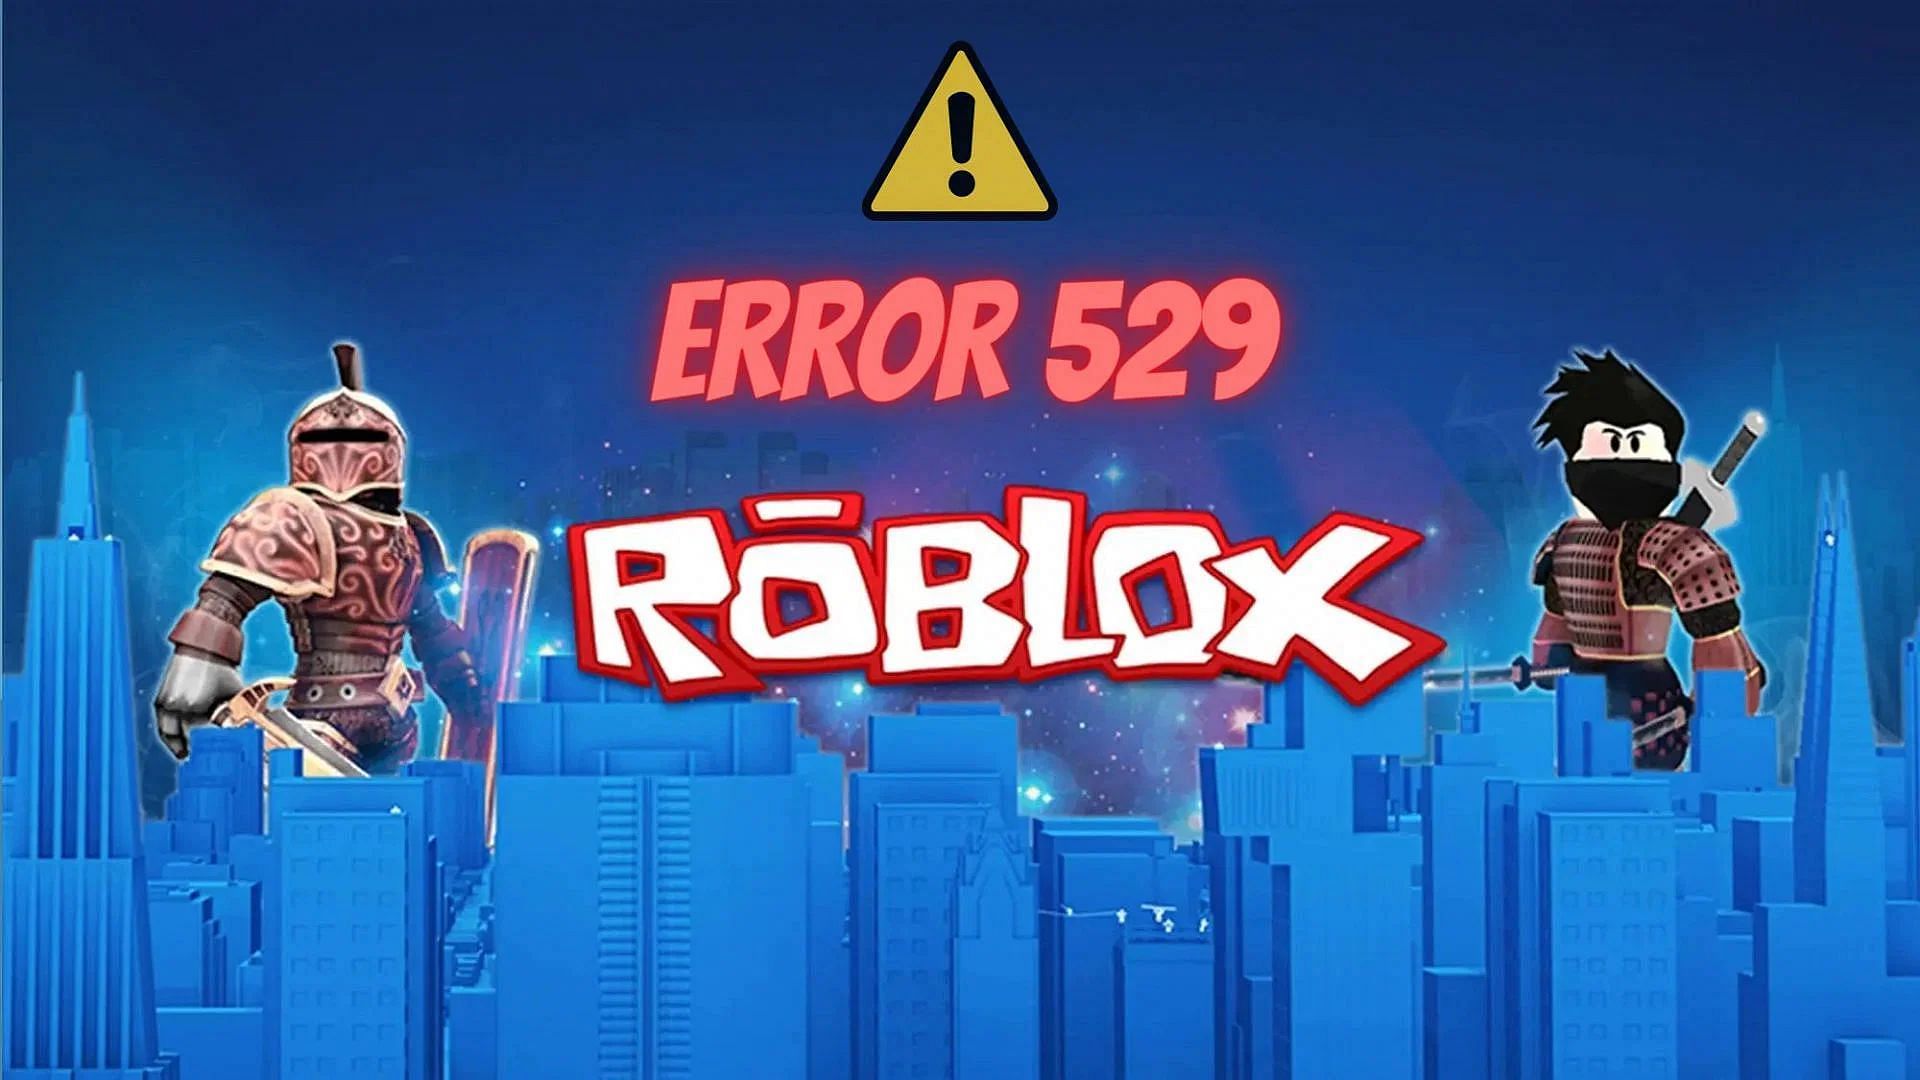 All about error 529 in Roblox (Image via Roblox)